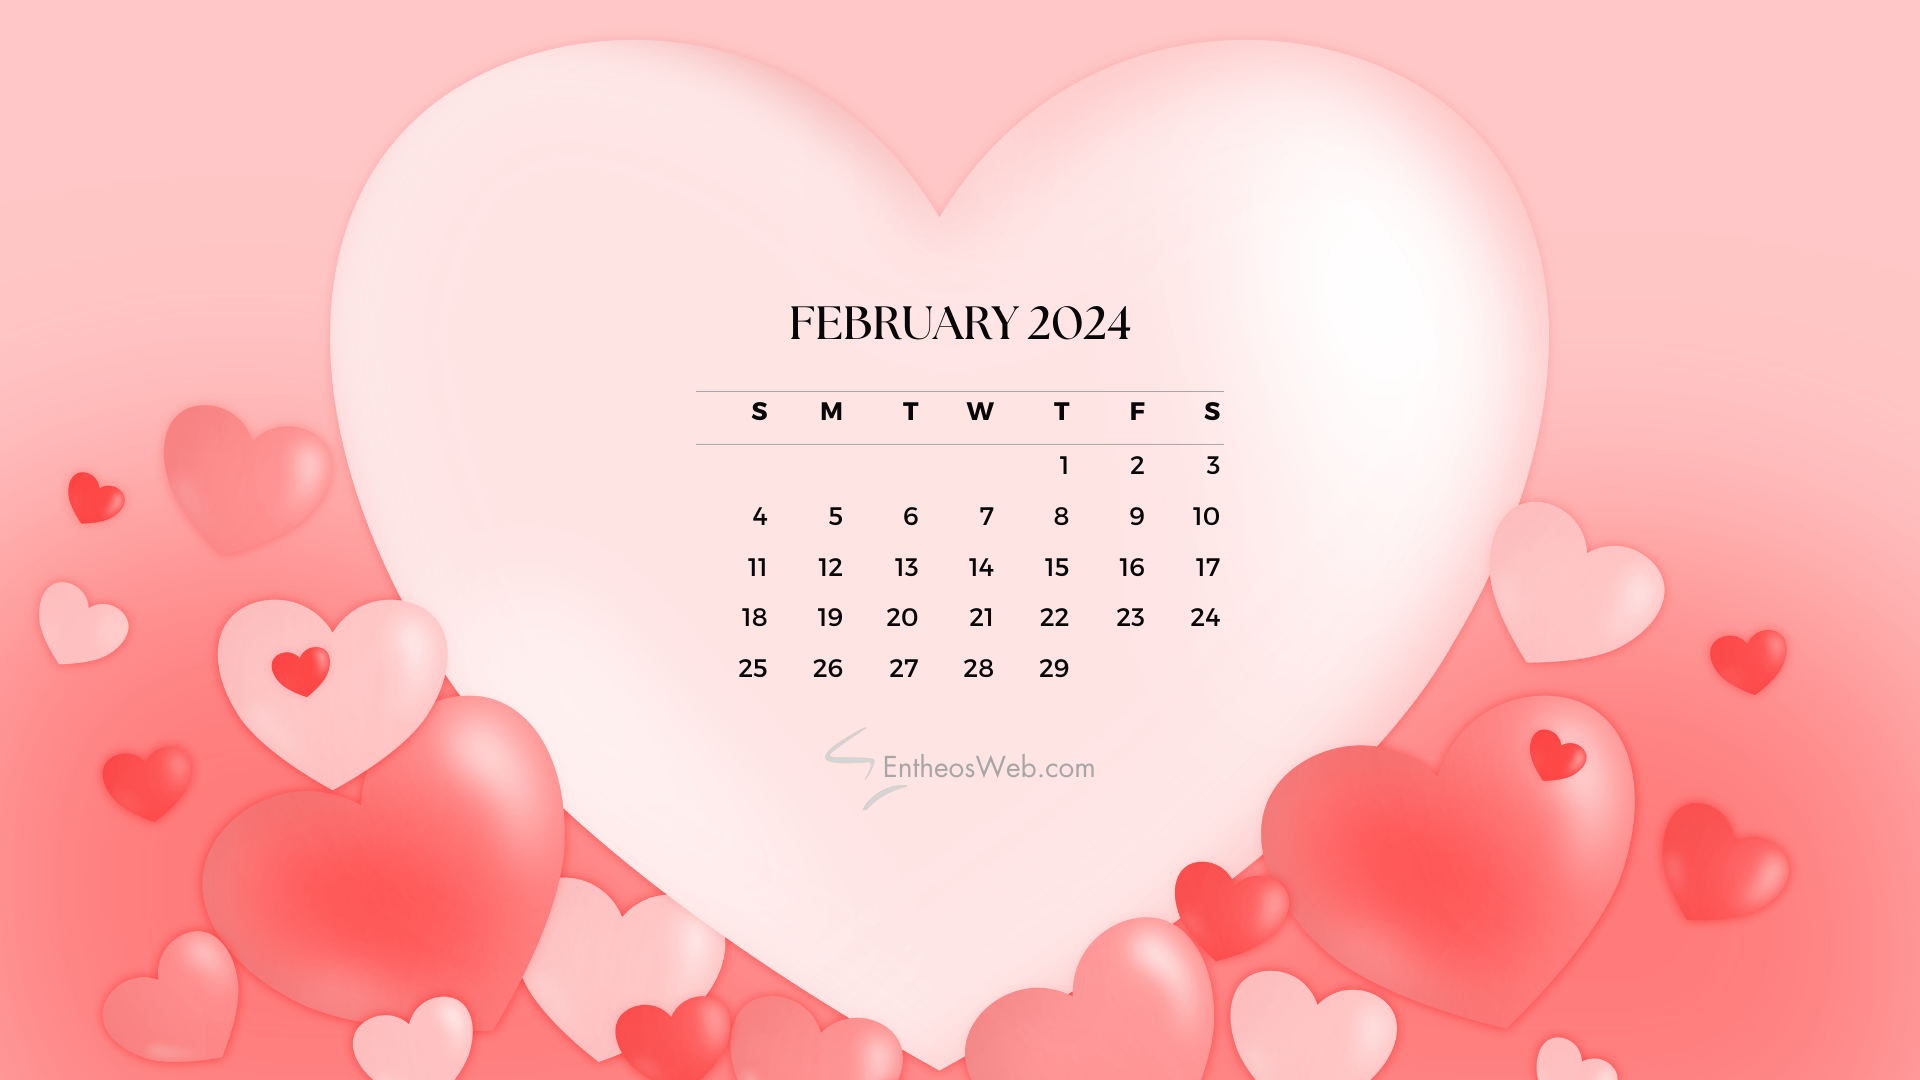 February 2024 Calendar Wallpapers - Top Free February 2024 Calendar ...